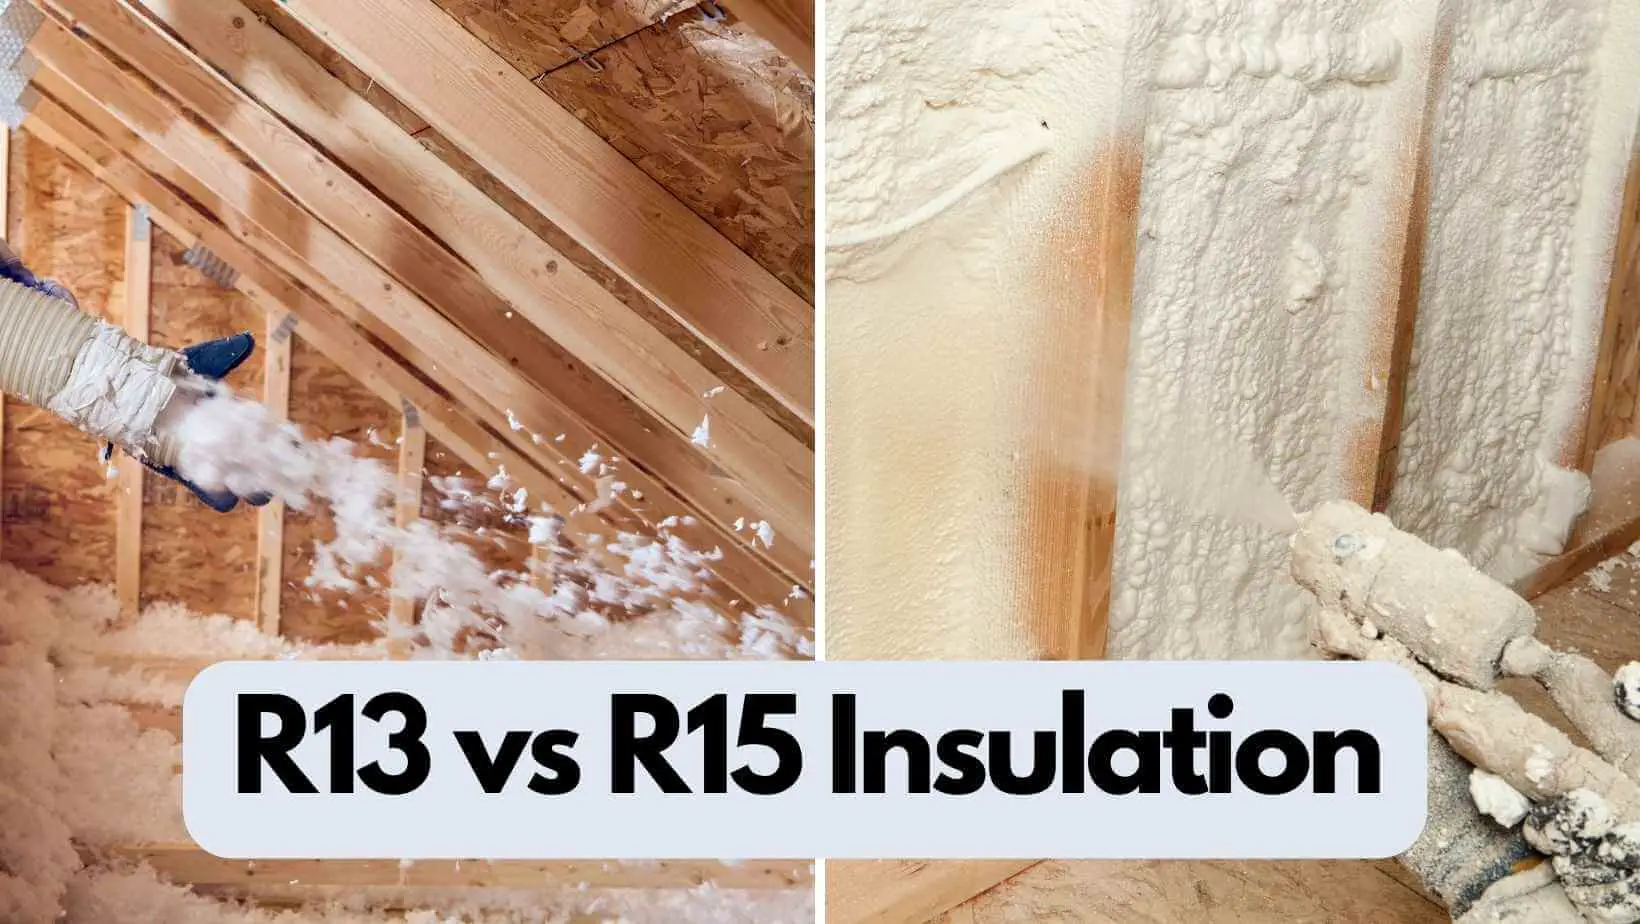 R13 vs R15 Insulation